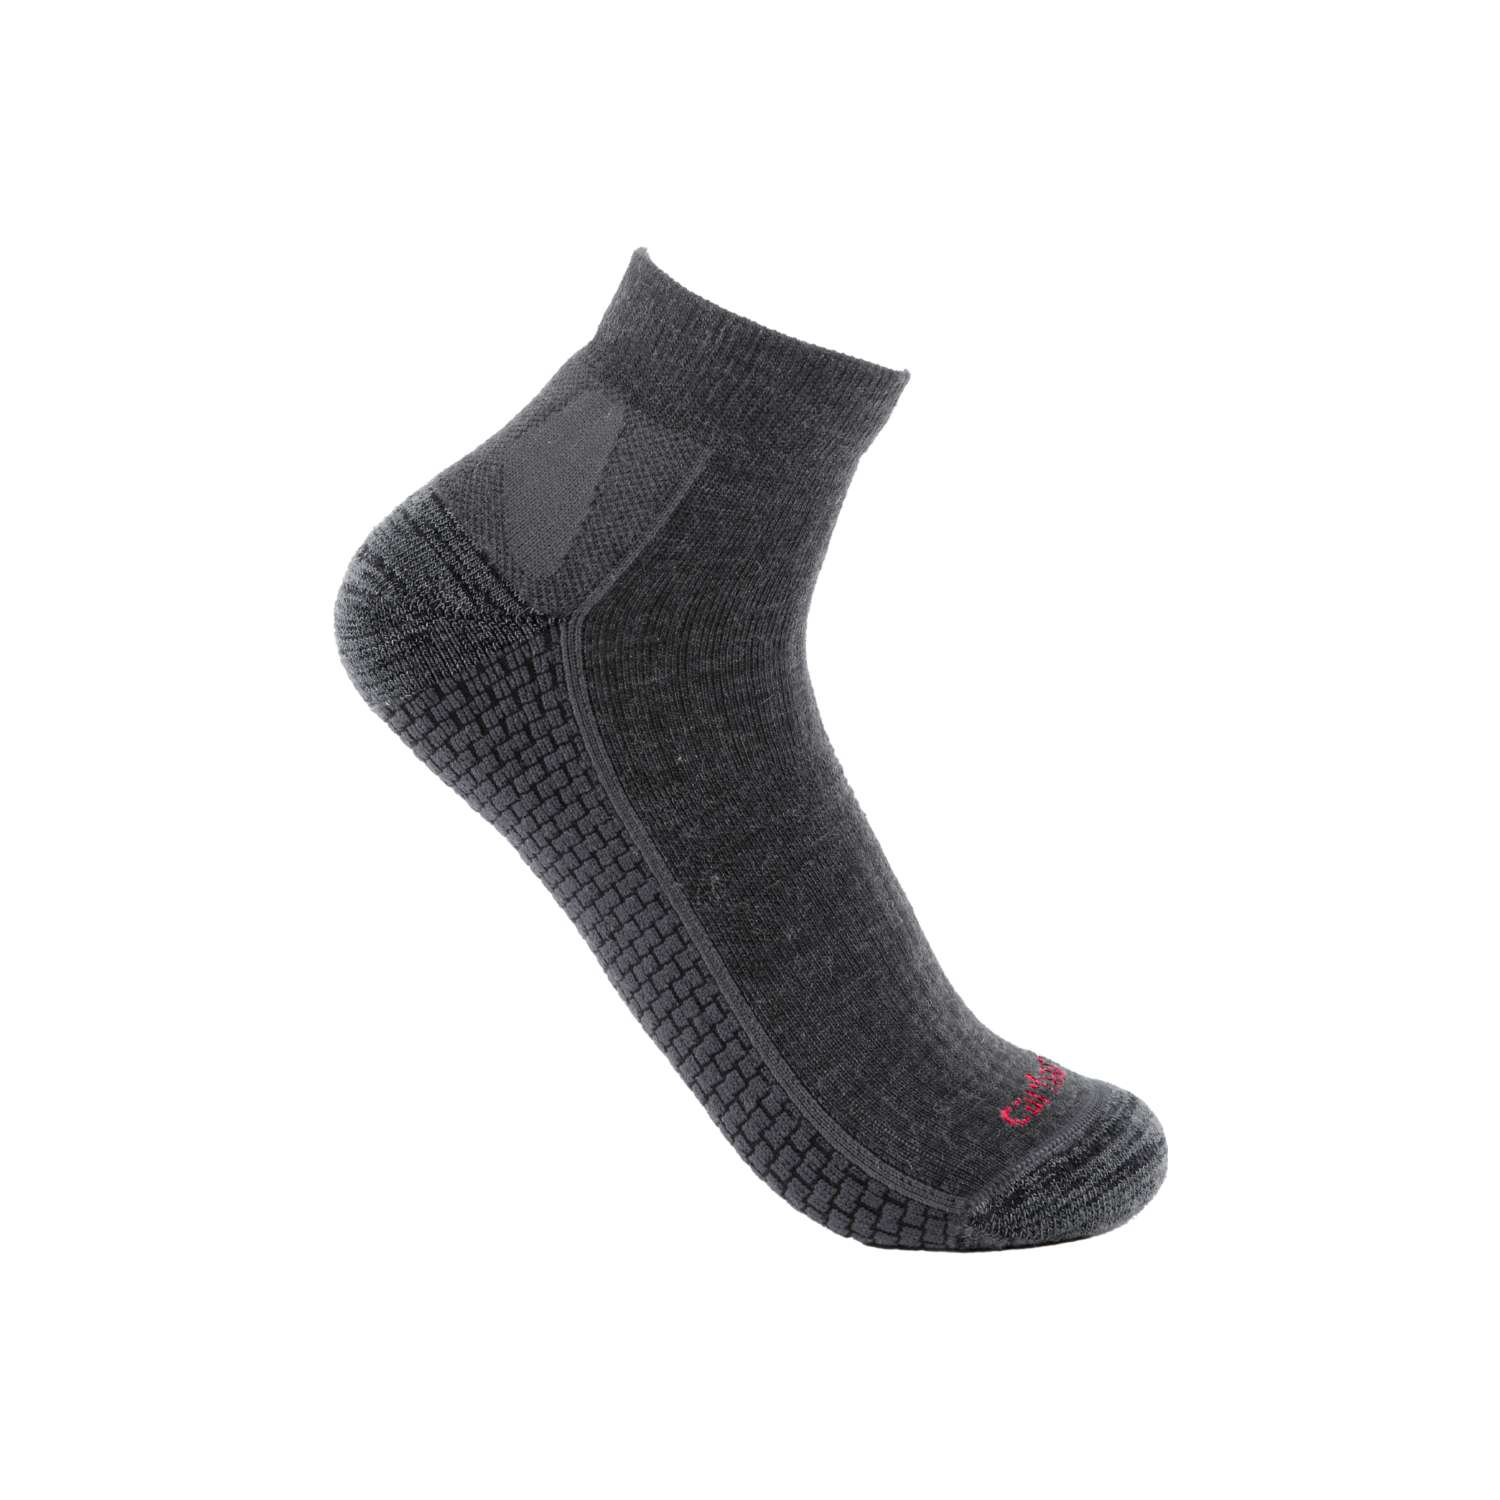 Knöchel hohe Socken,erino-Wollmischung